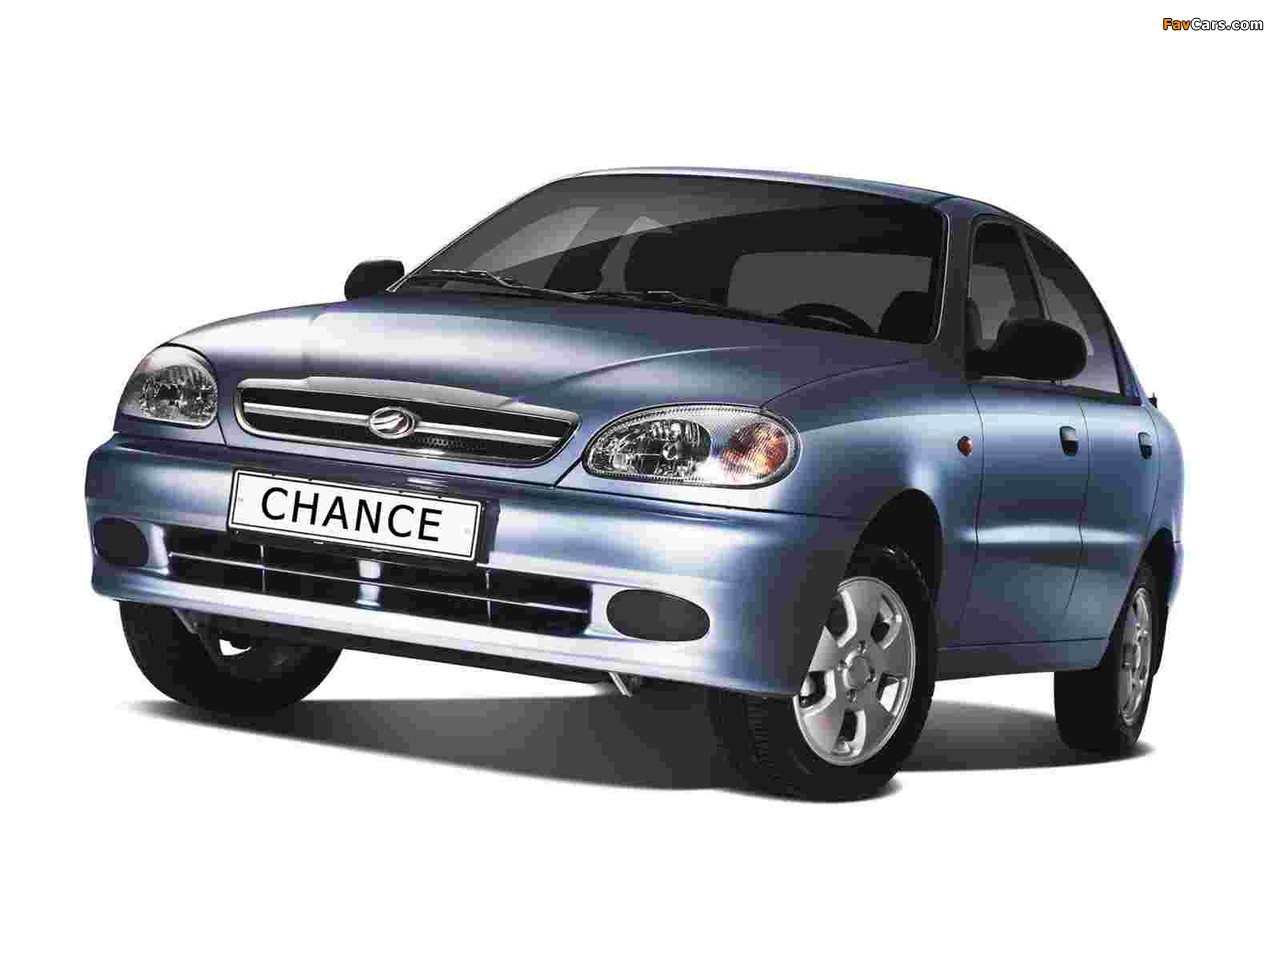 ZAZ Chance Sedan (D4) 2009 pictures (1280 x 960)